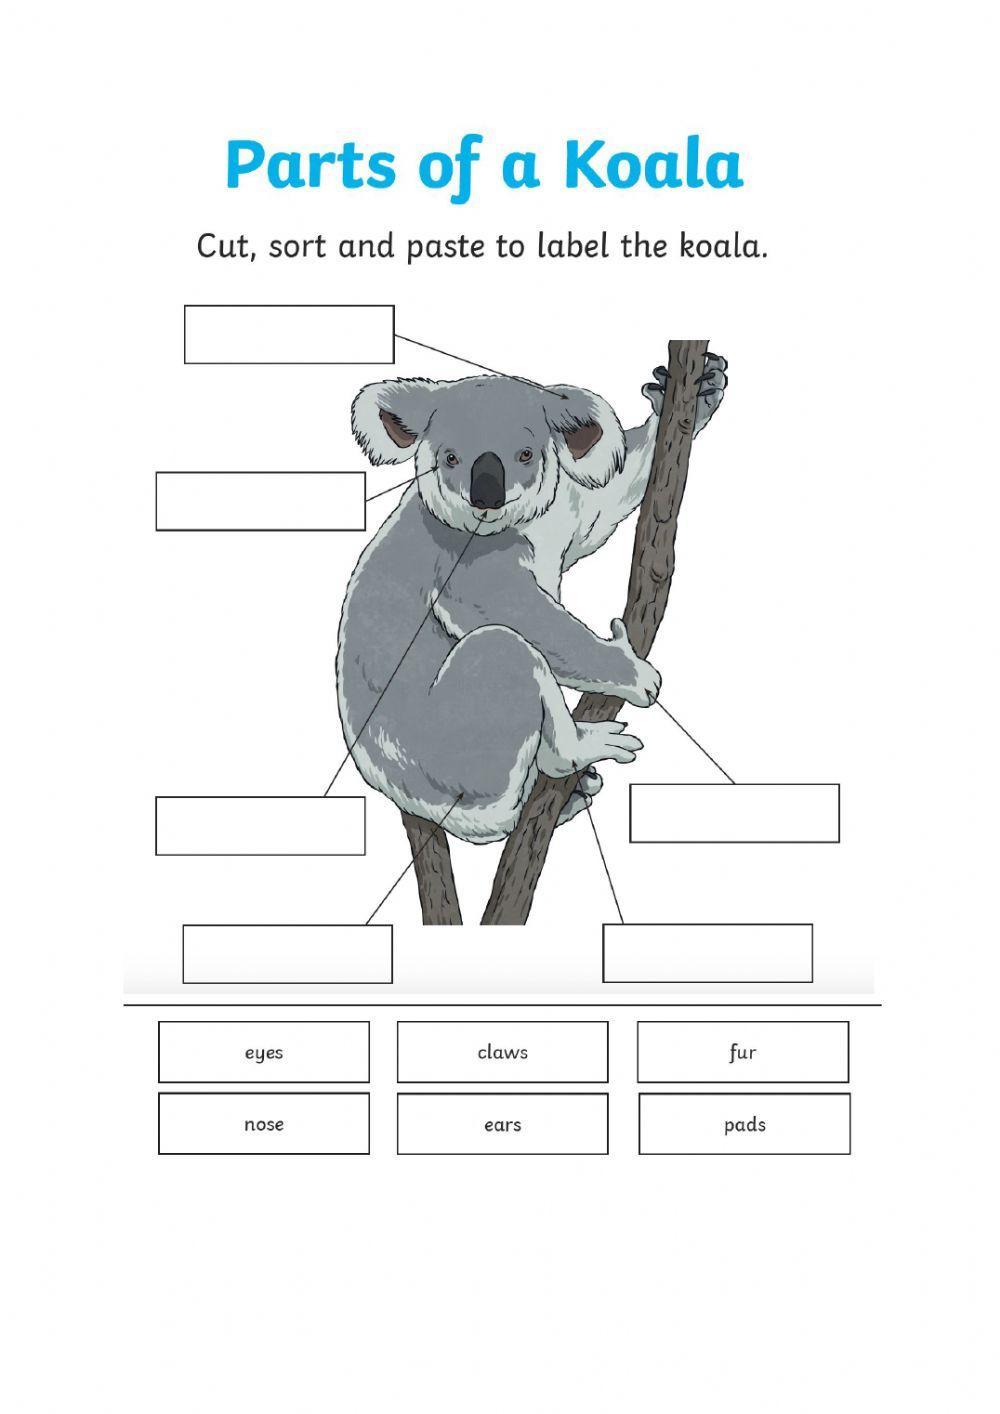 Labelling parts of Koala